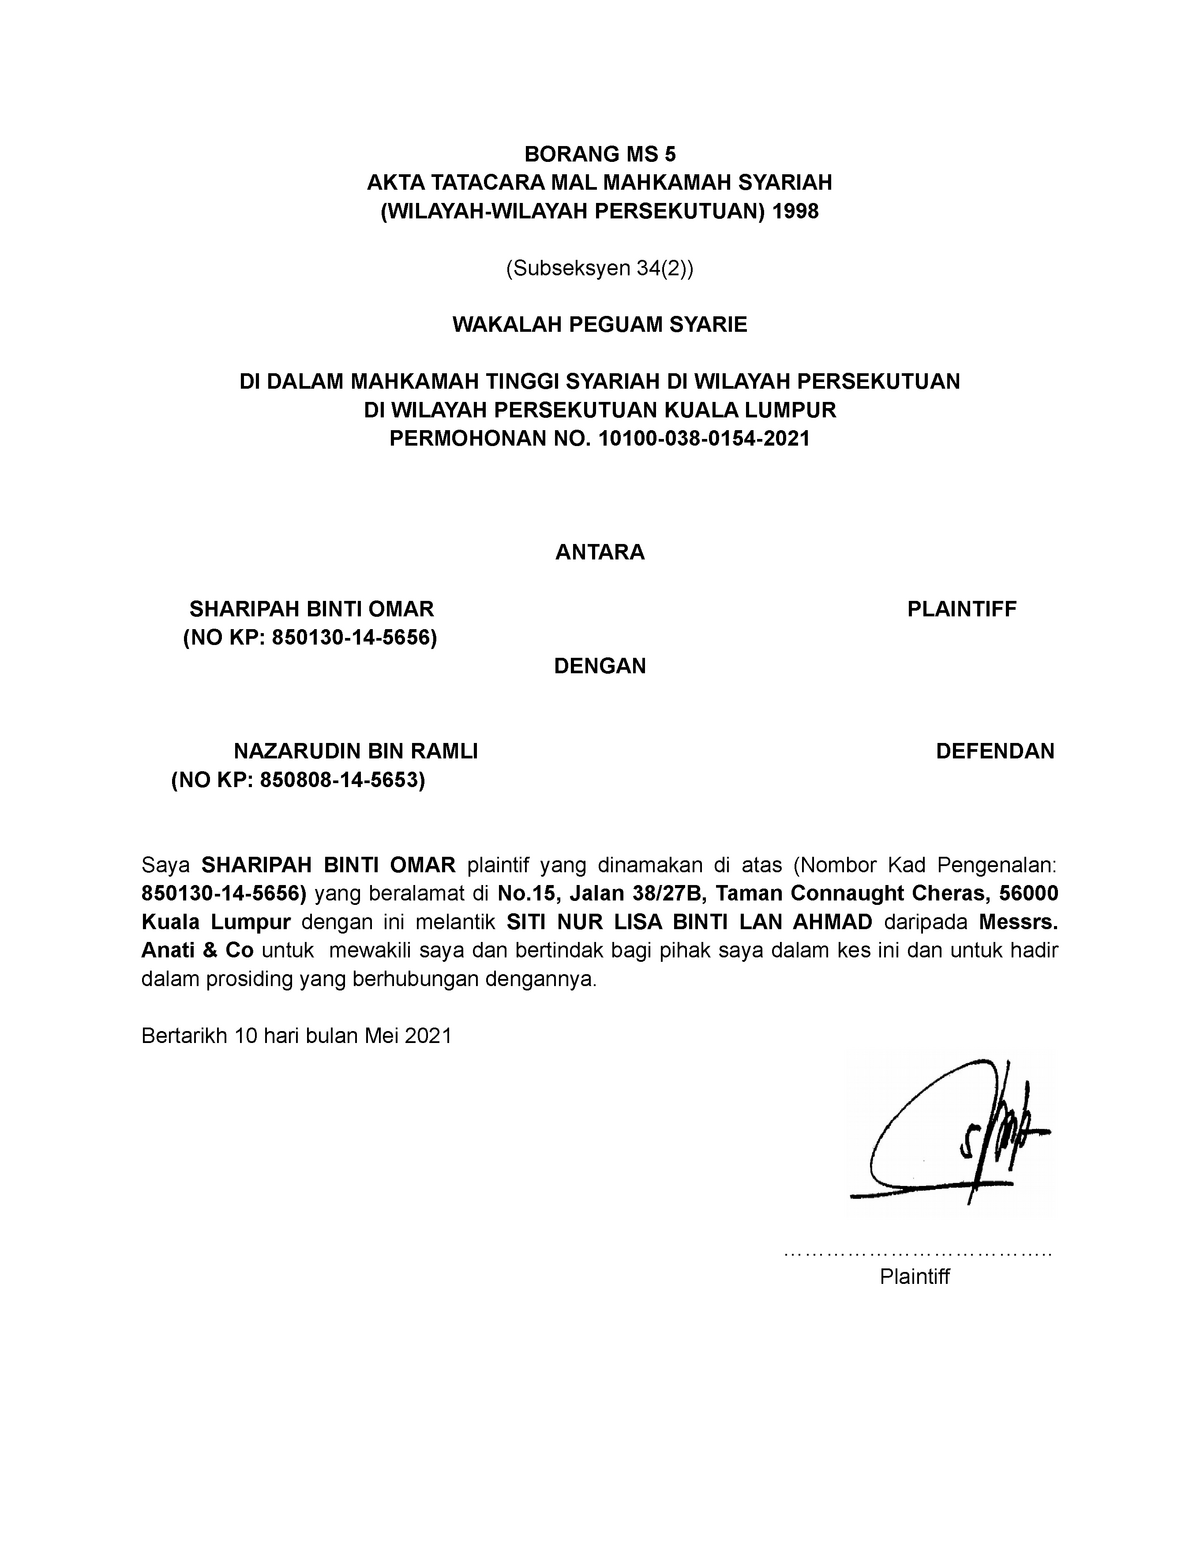 1 Wakalah Cover Letter Application Interim Order Borang Ms Akta Tatacara Mal Mahkamah Syariah Wilayah Wilayah Persekutuan 1998 Subseksyen 34 Wakalah Studocu